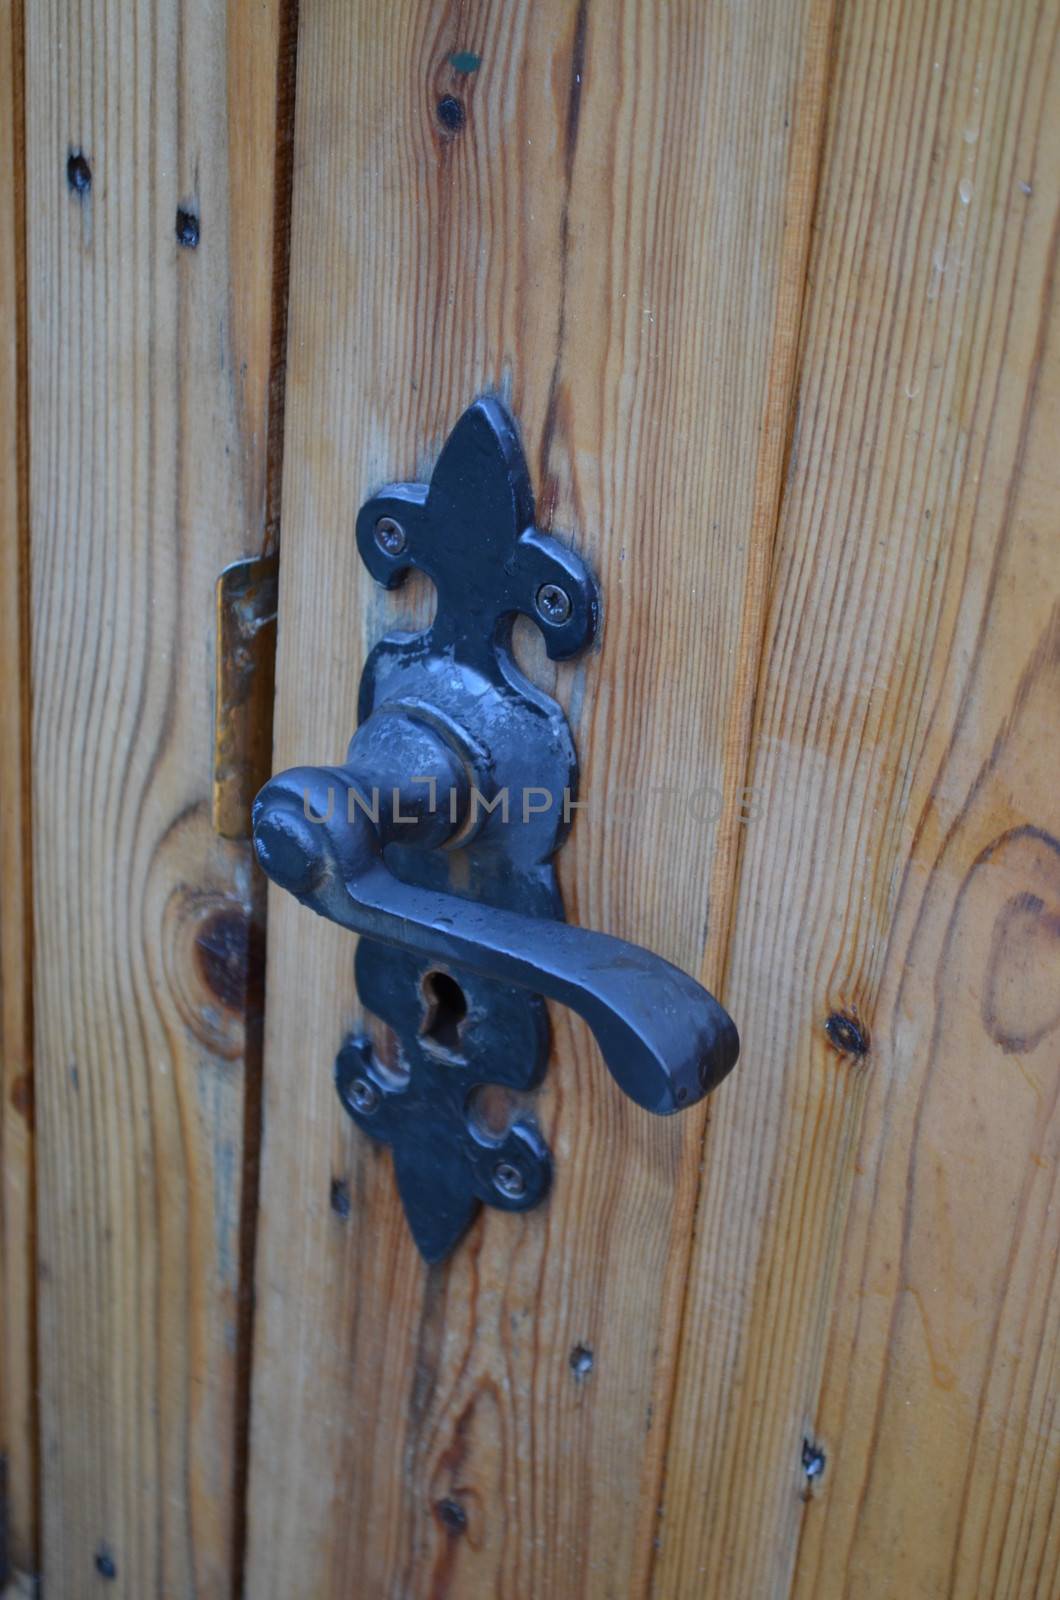 Ornate cast iron door handle on garden shed.